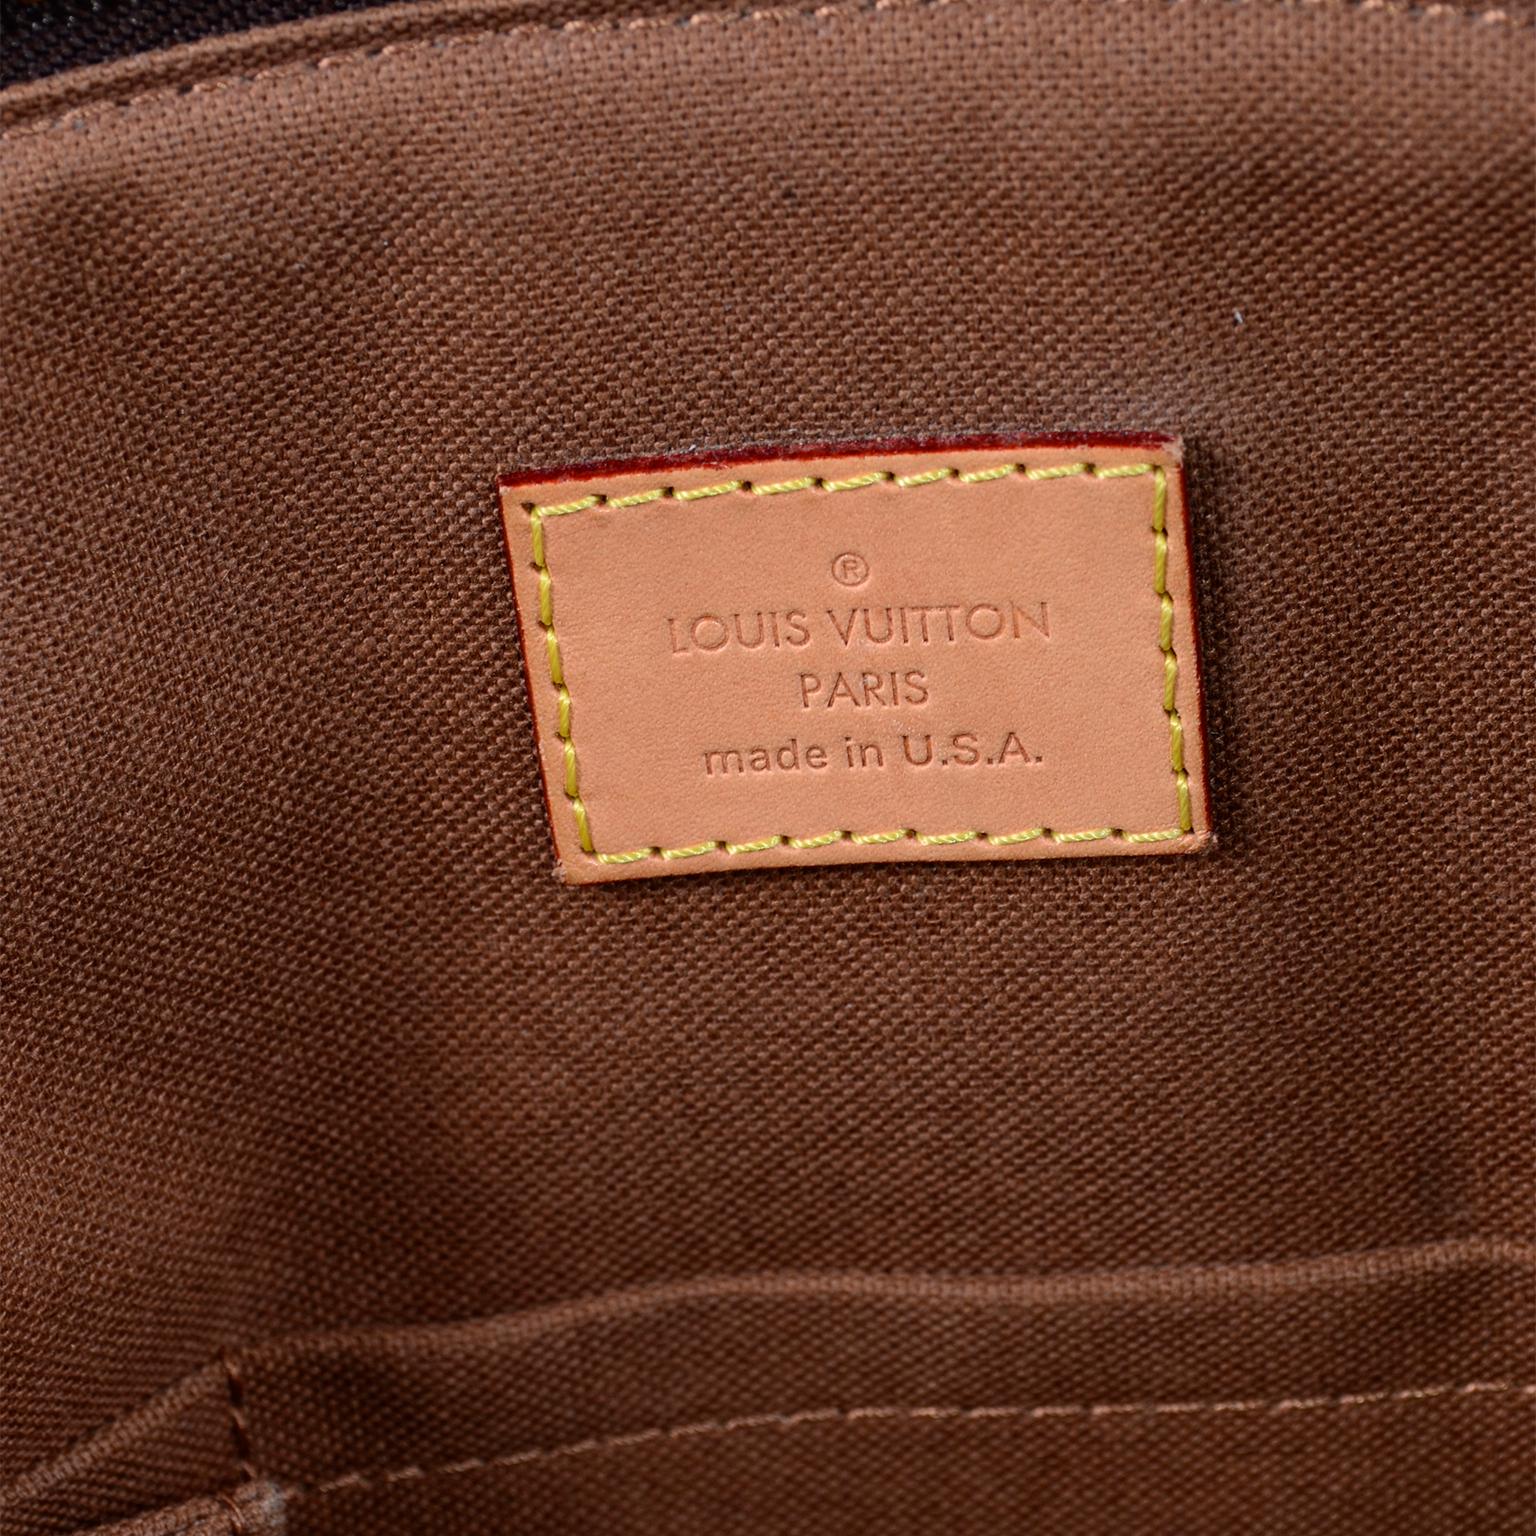 Louis Vuitton Monogram Handbag Dark Brown Tivoli Bag With Leather Trim 7